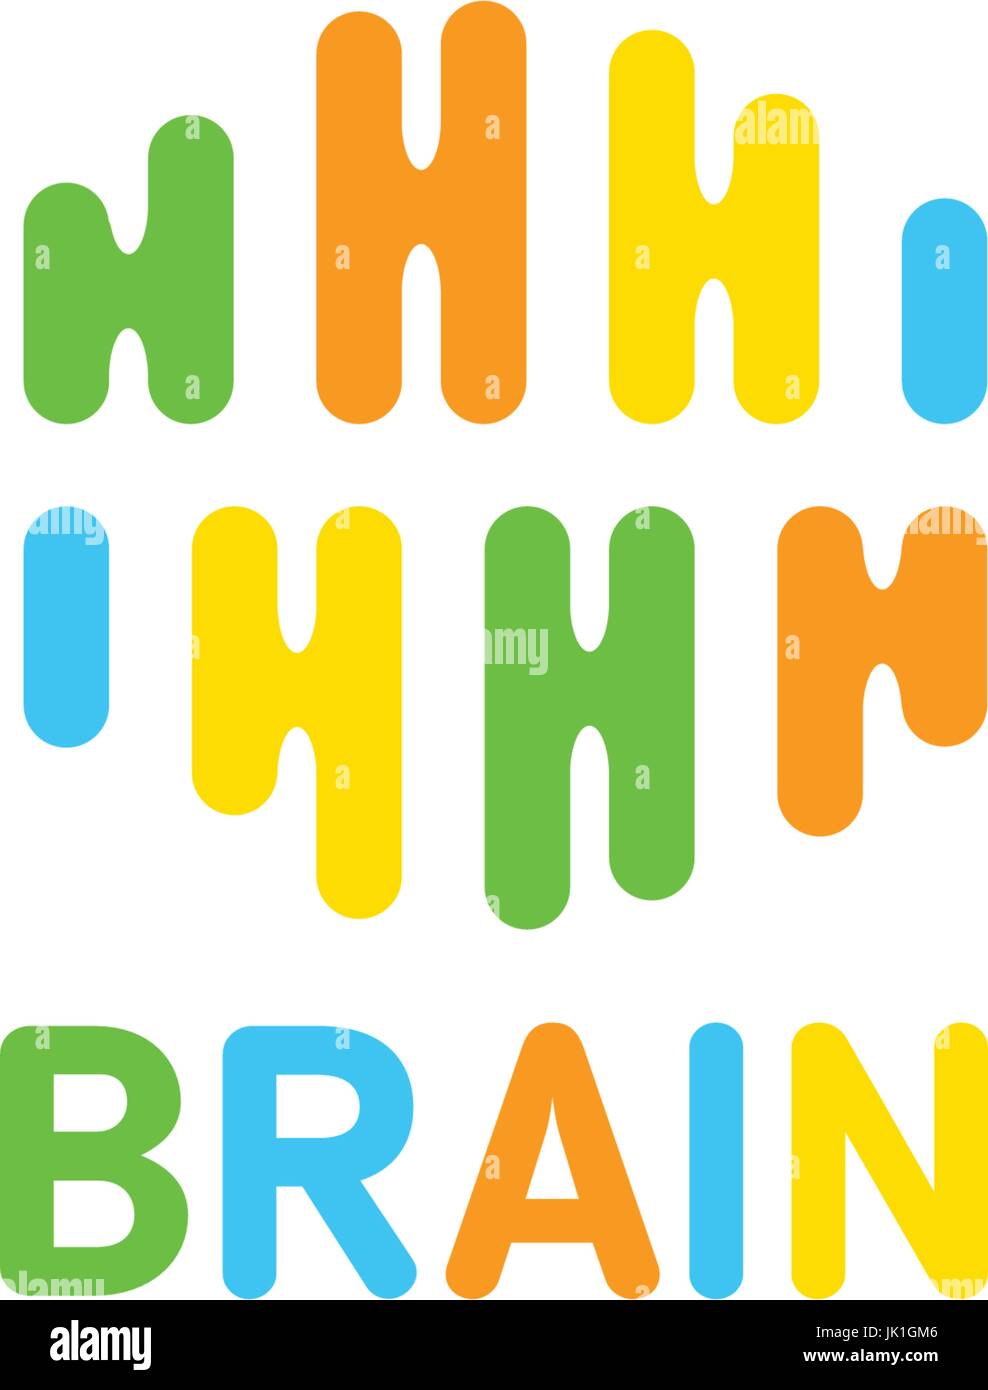 Art creative brain linea logo. Vector idea brainstorm logotype. Stock Vector